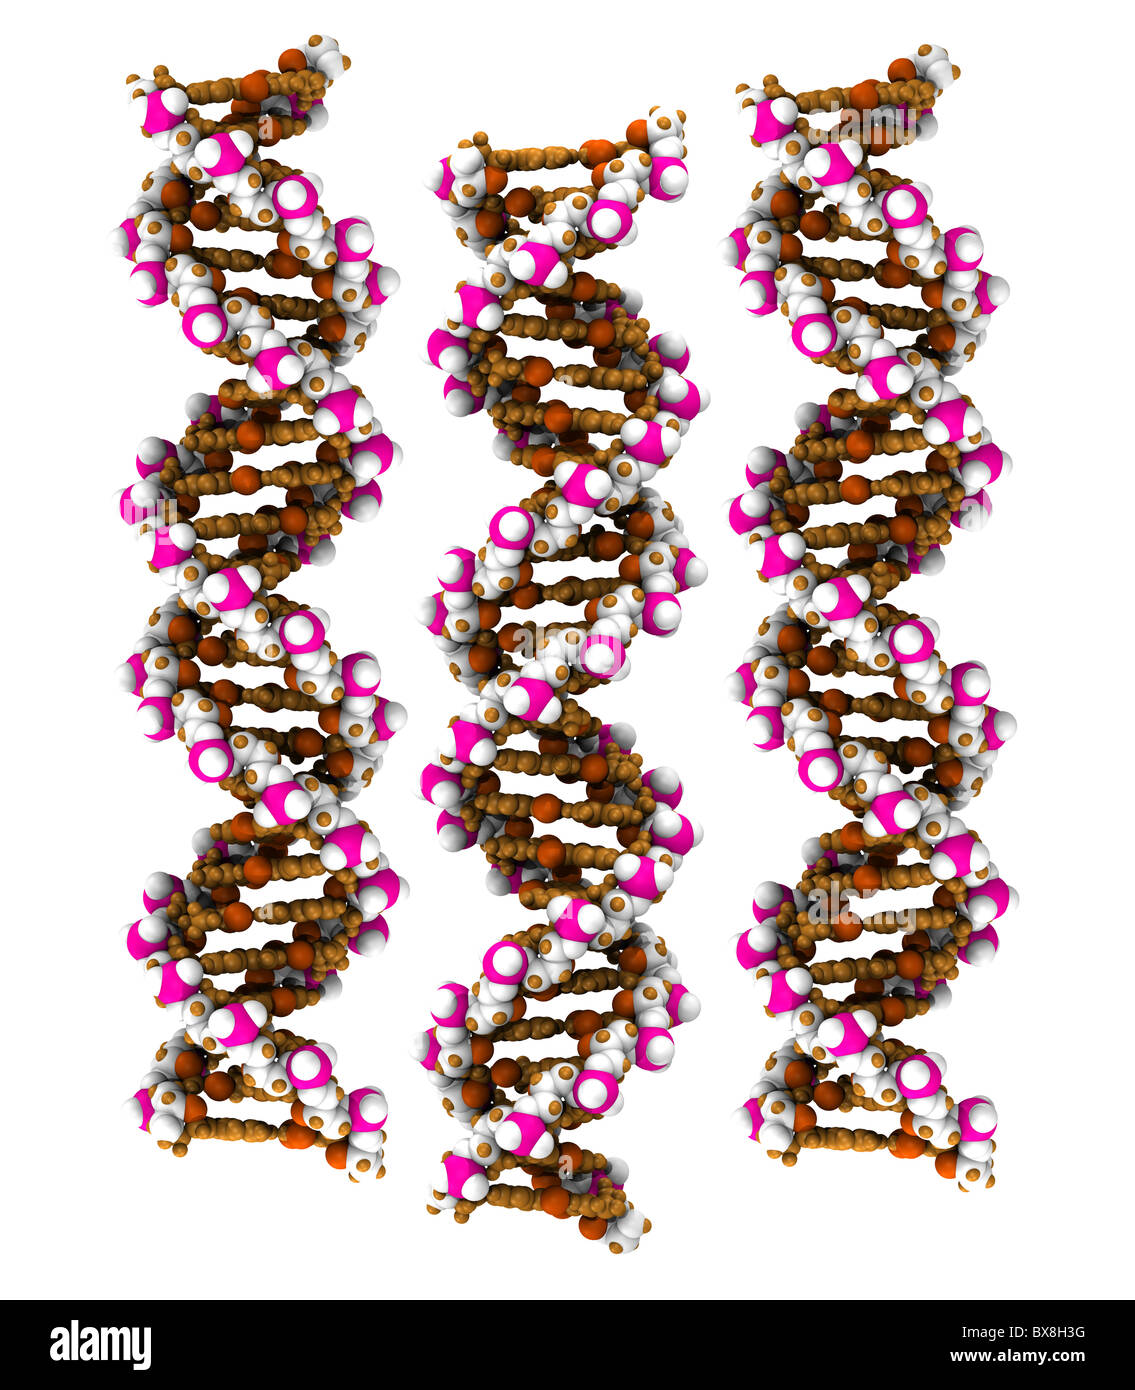 Raumfüllende Computer 3D-Modell eines DNA-Moleküls Stockfoto